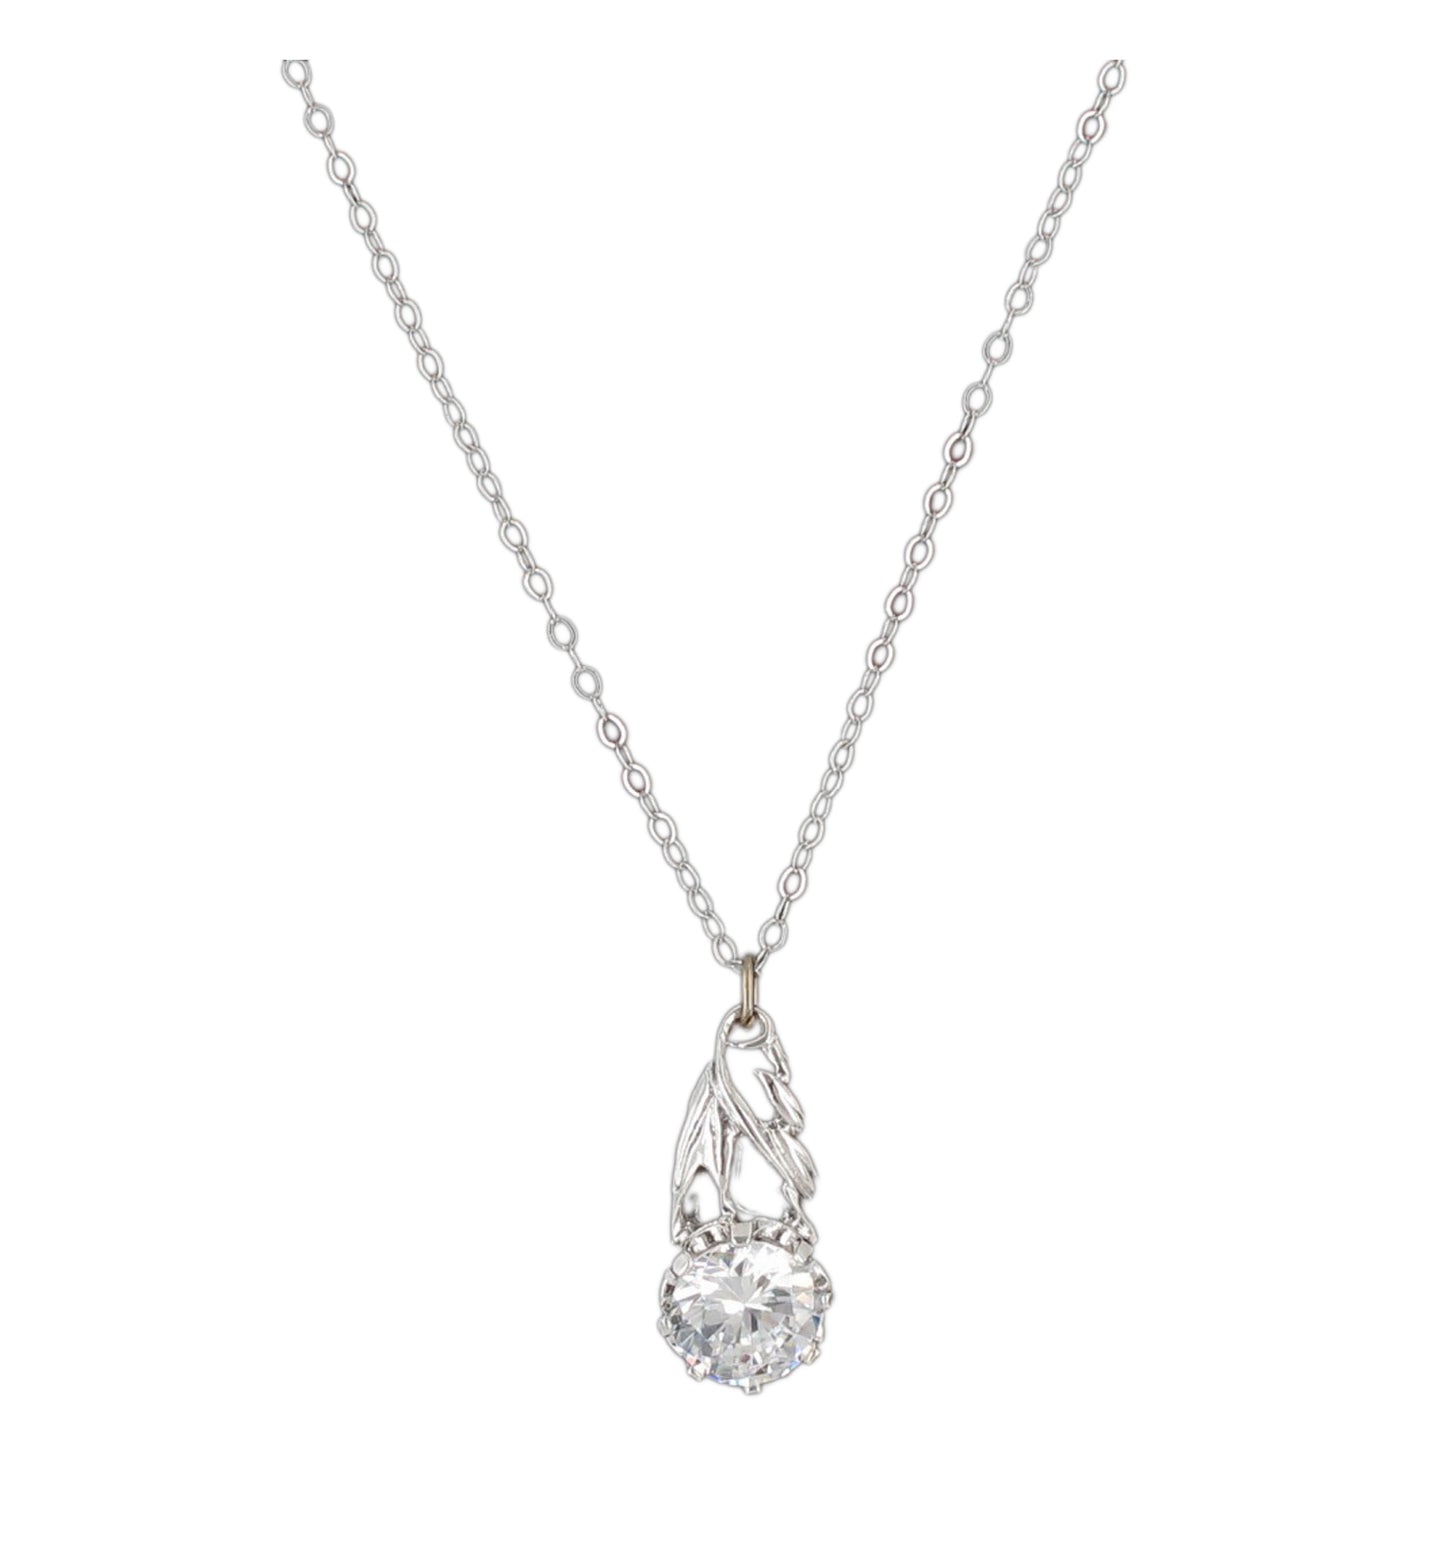 Clear Rhinestone Leaf Pendant 3/4" + Silver Tone Chain Necklace 18"